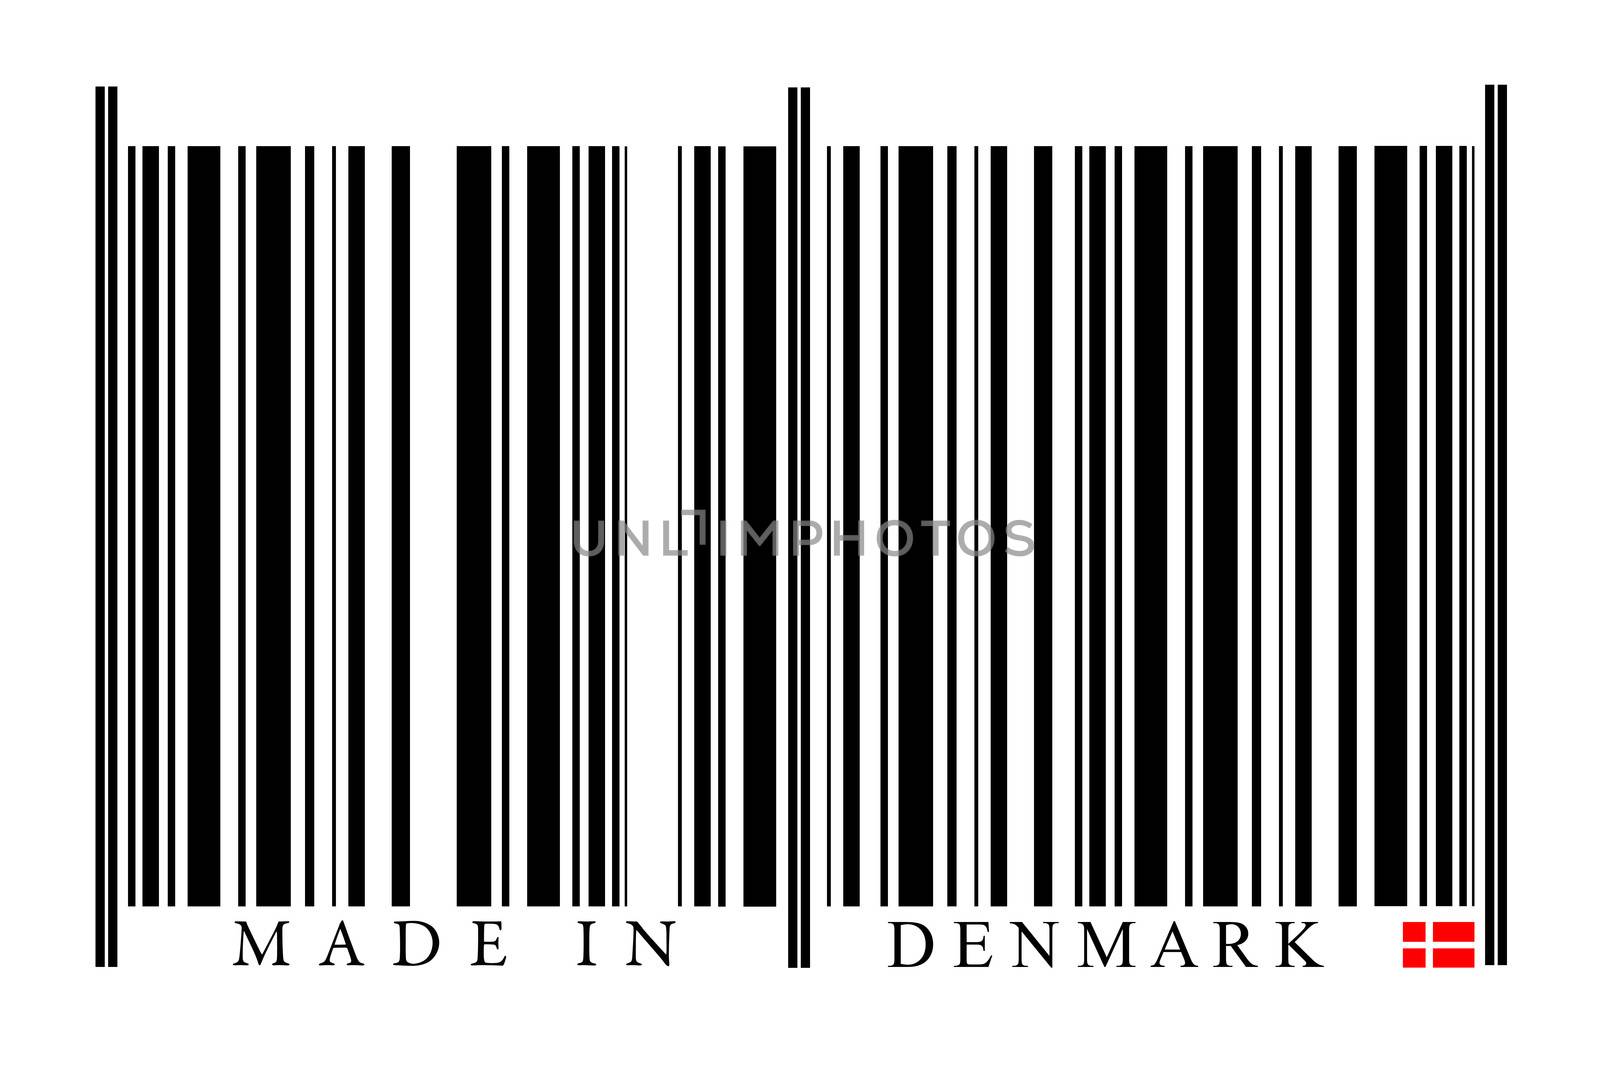 Denmark barcode by gemenacom